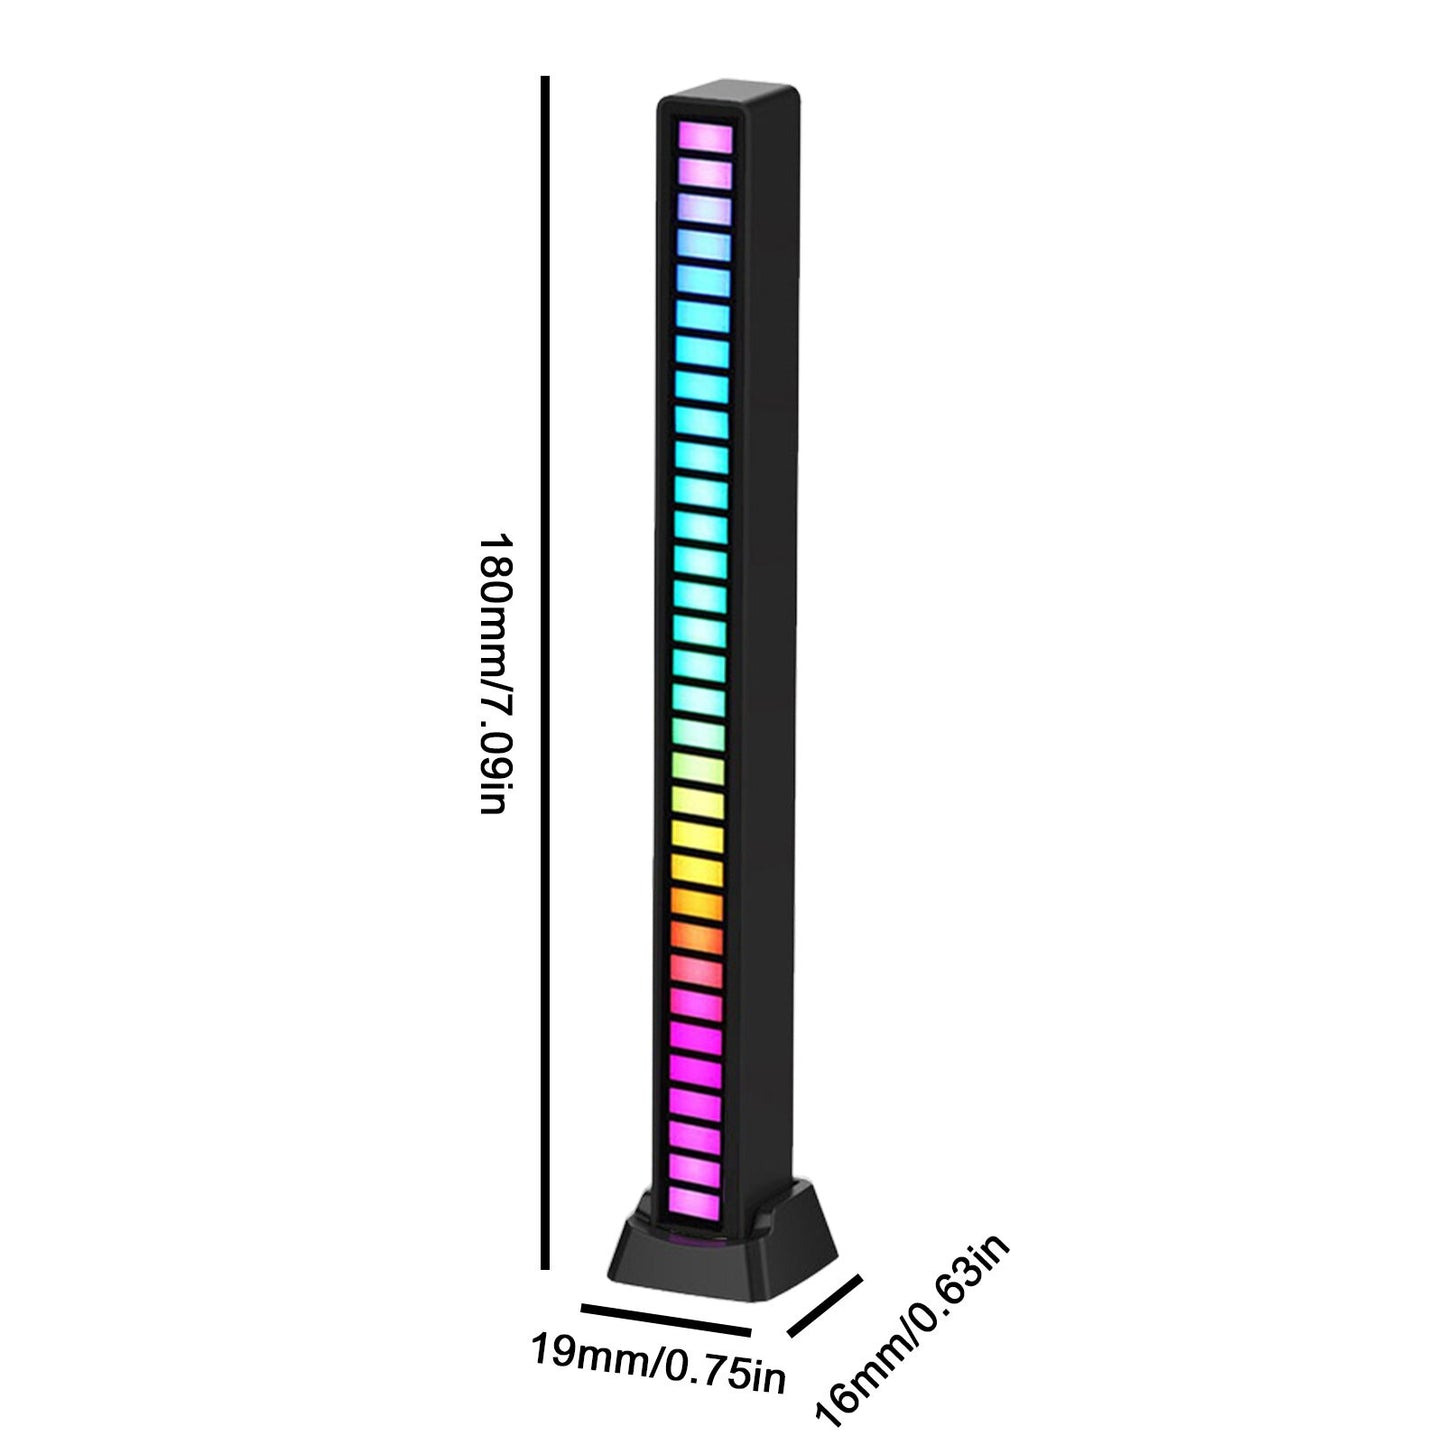 Qfdian RGB Voice-Activated Rhythm Light Sound Reactive Led Bar Rechargeable Colorful Office Rhythm Music LED Light Ambient Strip Decor